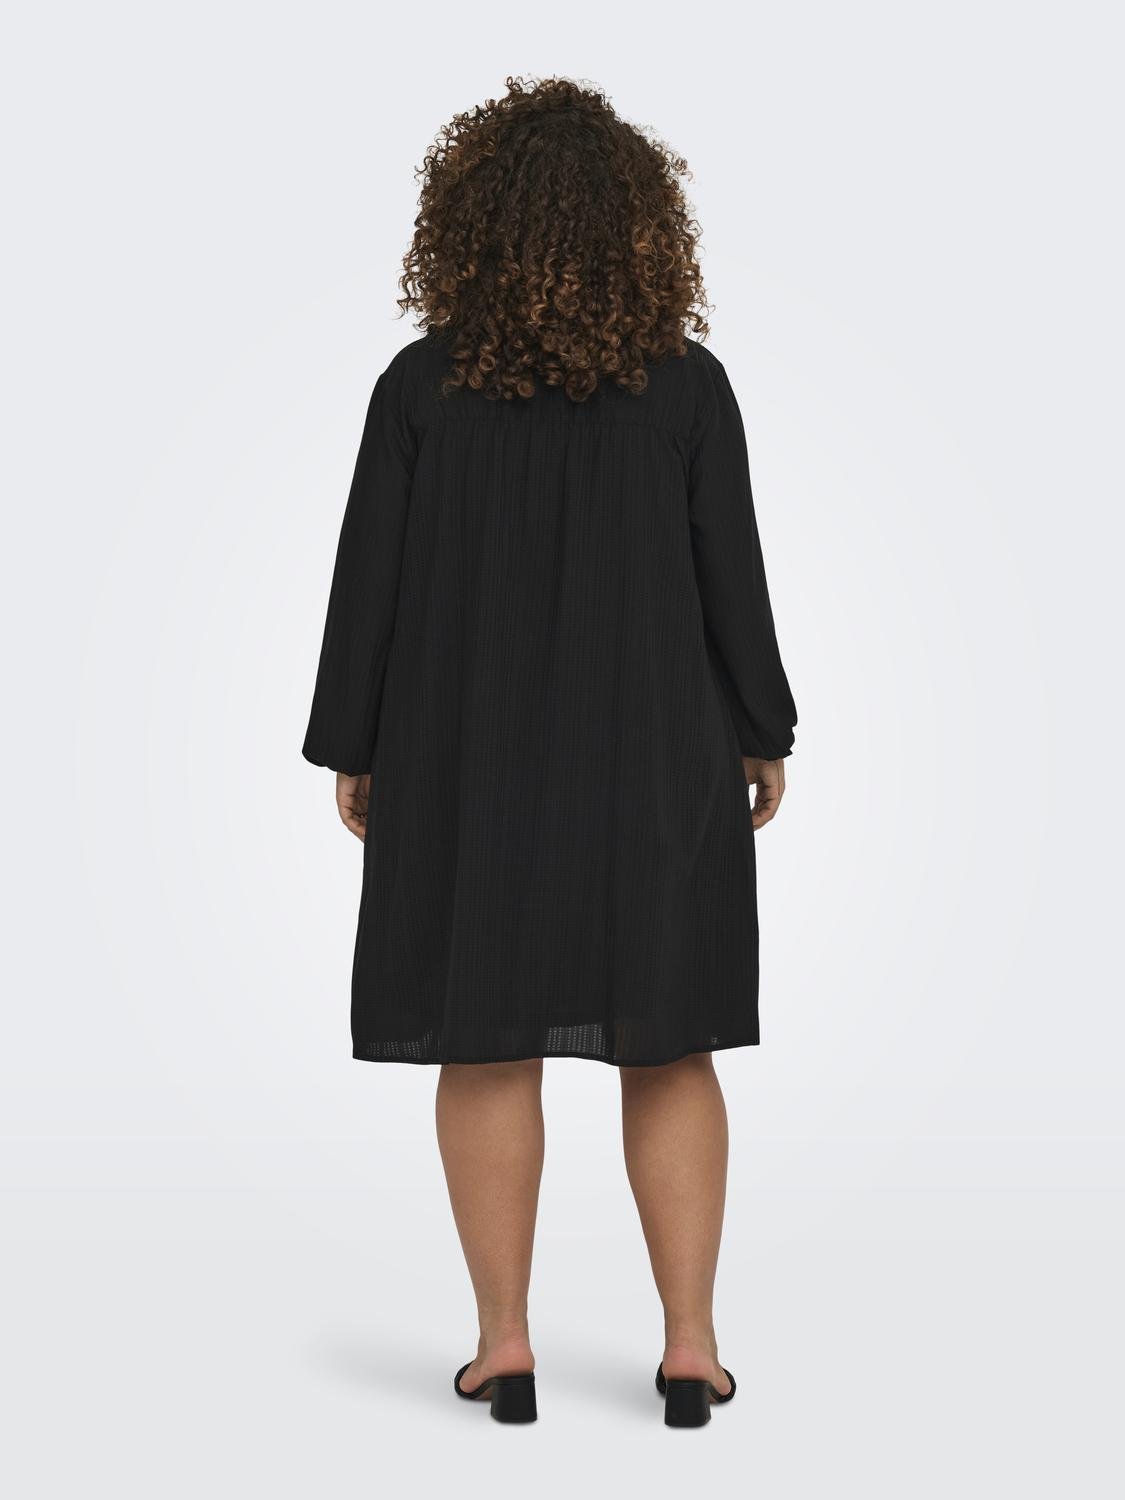 ONLY Curvy v-neck layered dress -Black - 15312376